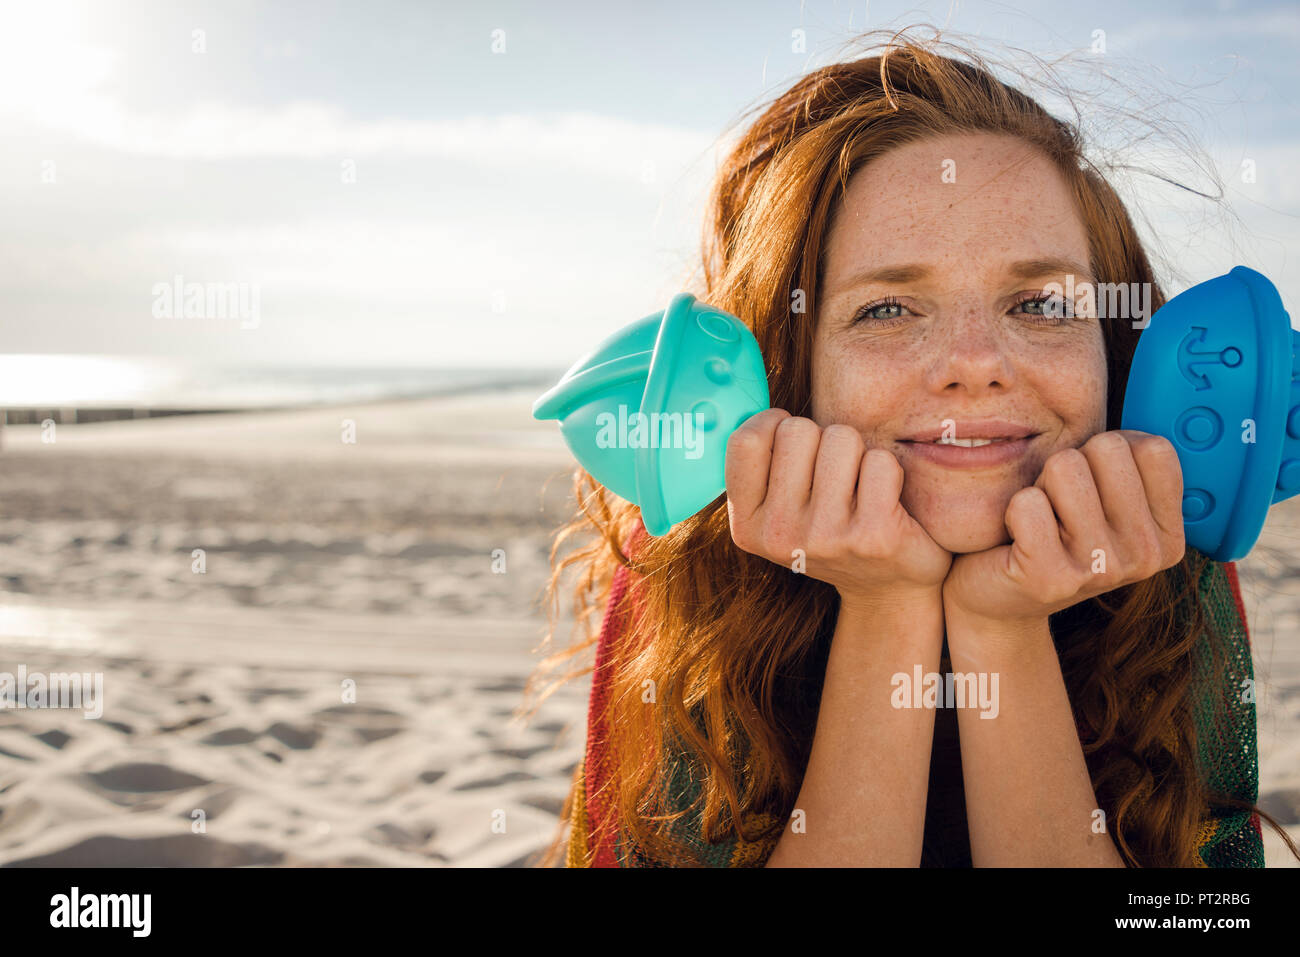 Rothaarige Frau am Strand mit Strand Spielzeug Stockfoto